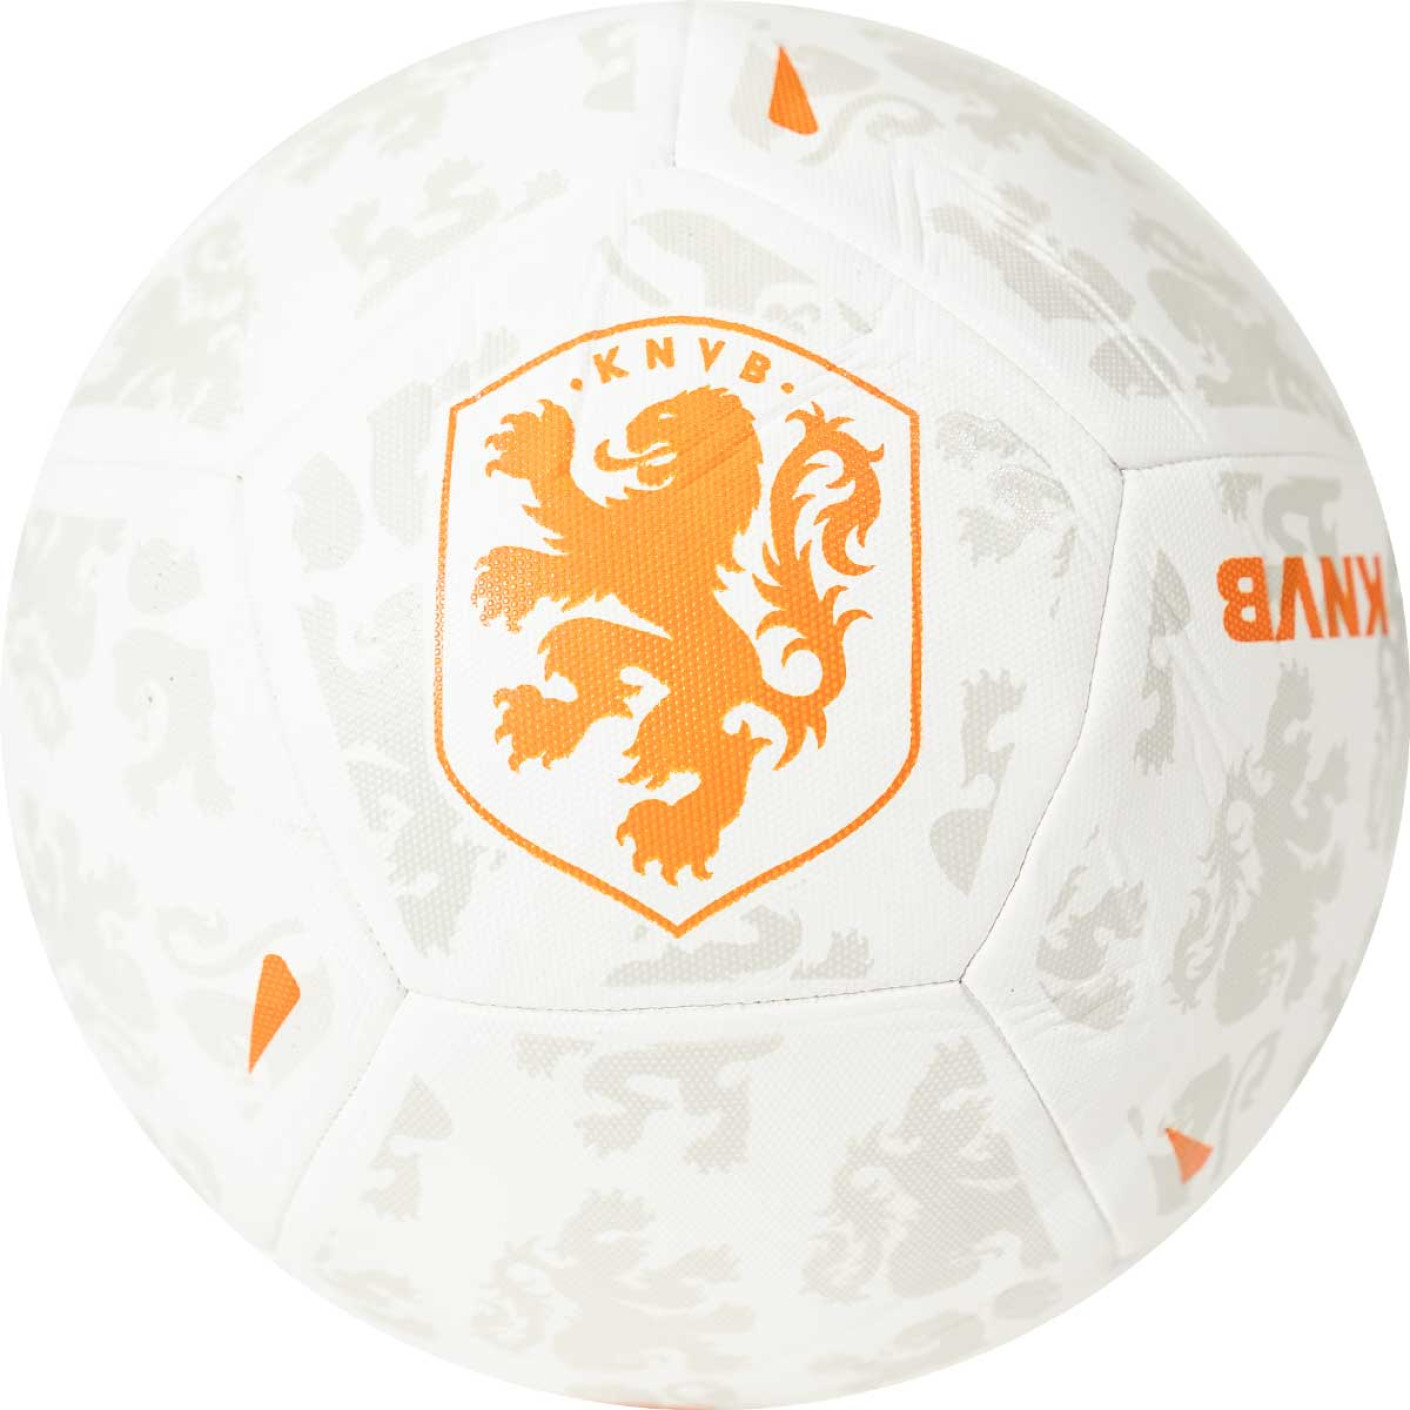 KNVB Logo Football White